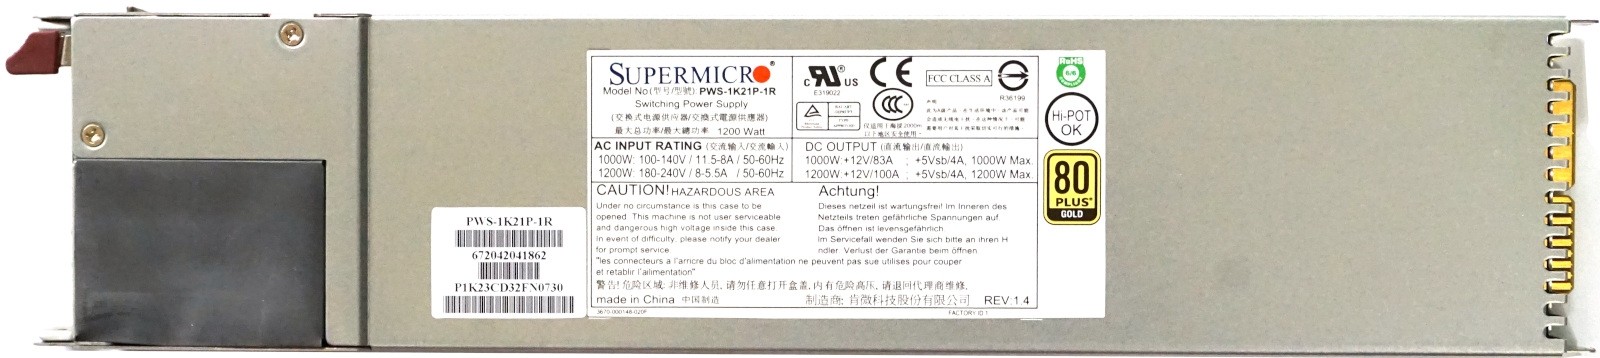 SuperMicro (PWS-1K21P-1R) CSE-846 1200W 'Gold' Hot-Swap PSU